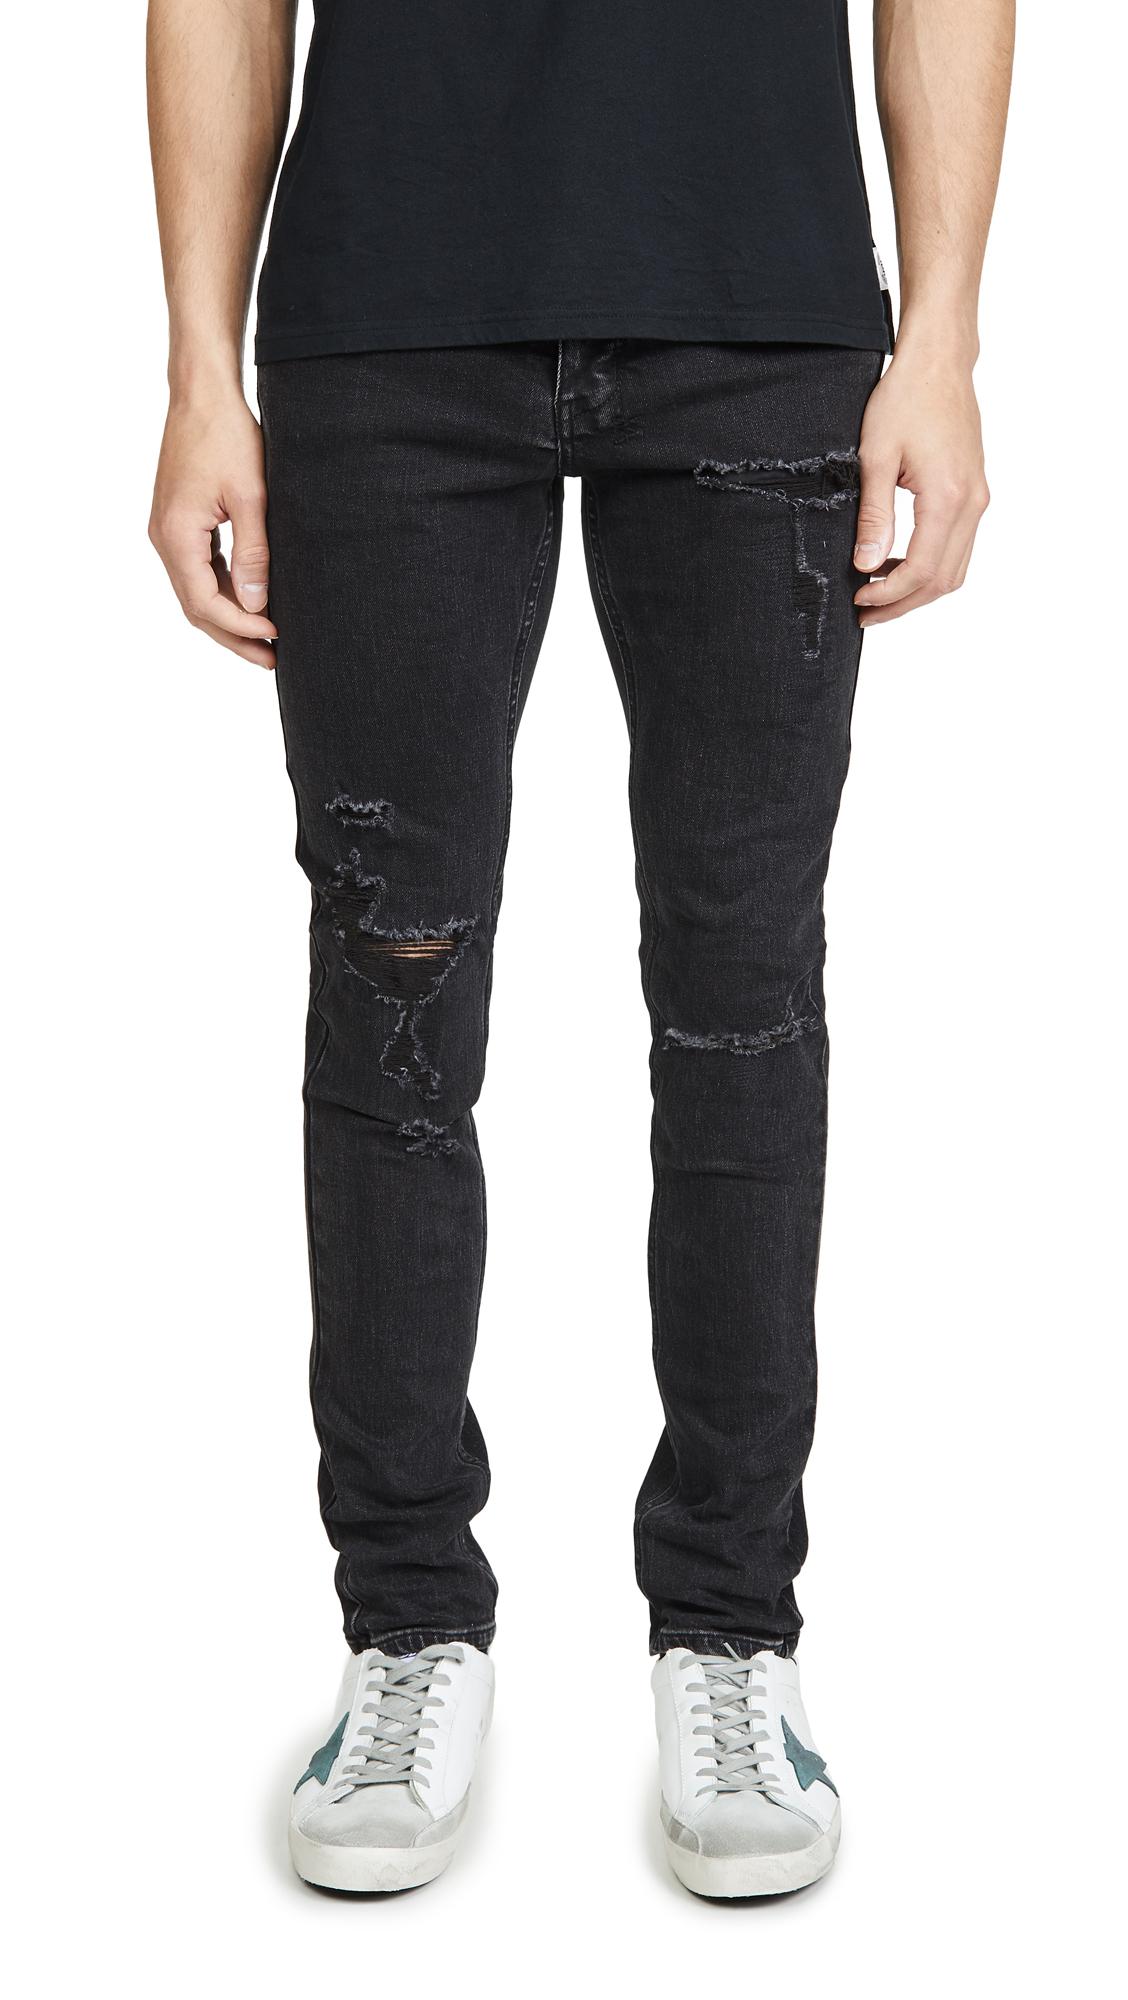 Ksubi Denim Chitch Concrete Distressed Jeans in Black for Men - Lyst